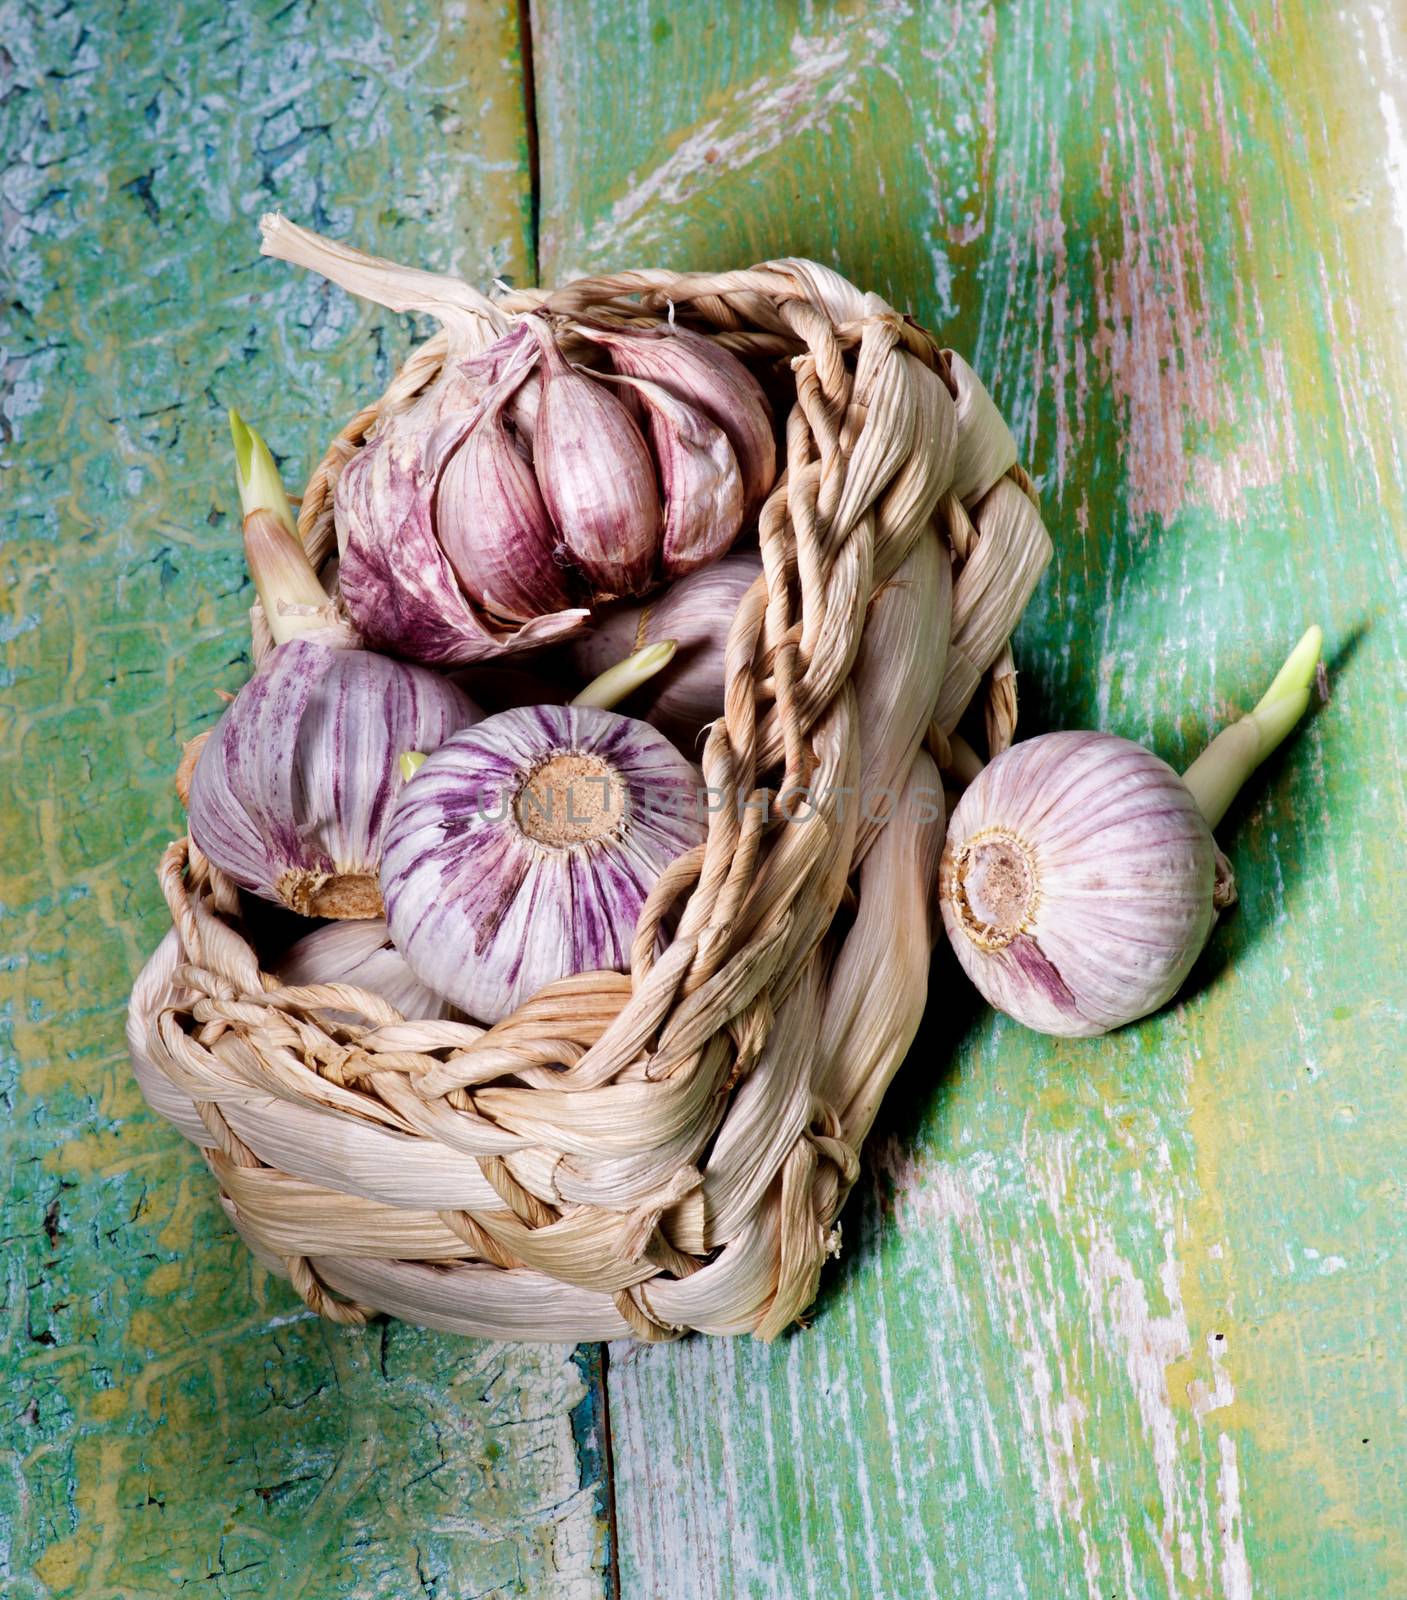 Arrangement of Fresh Pink Garlic with Green Stems in Wicker Basket closeup on Cracked Wooden background